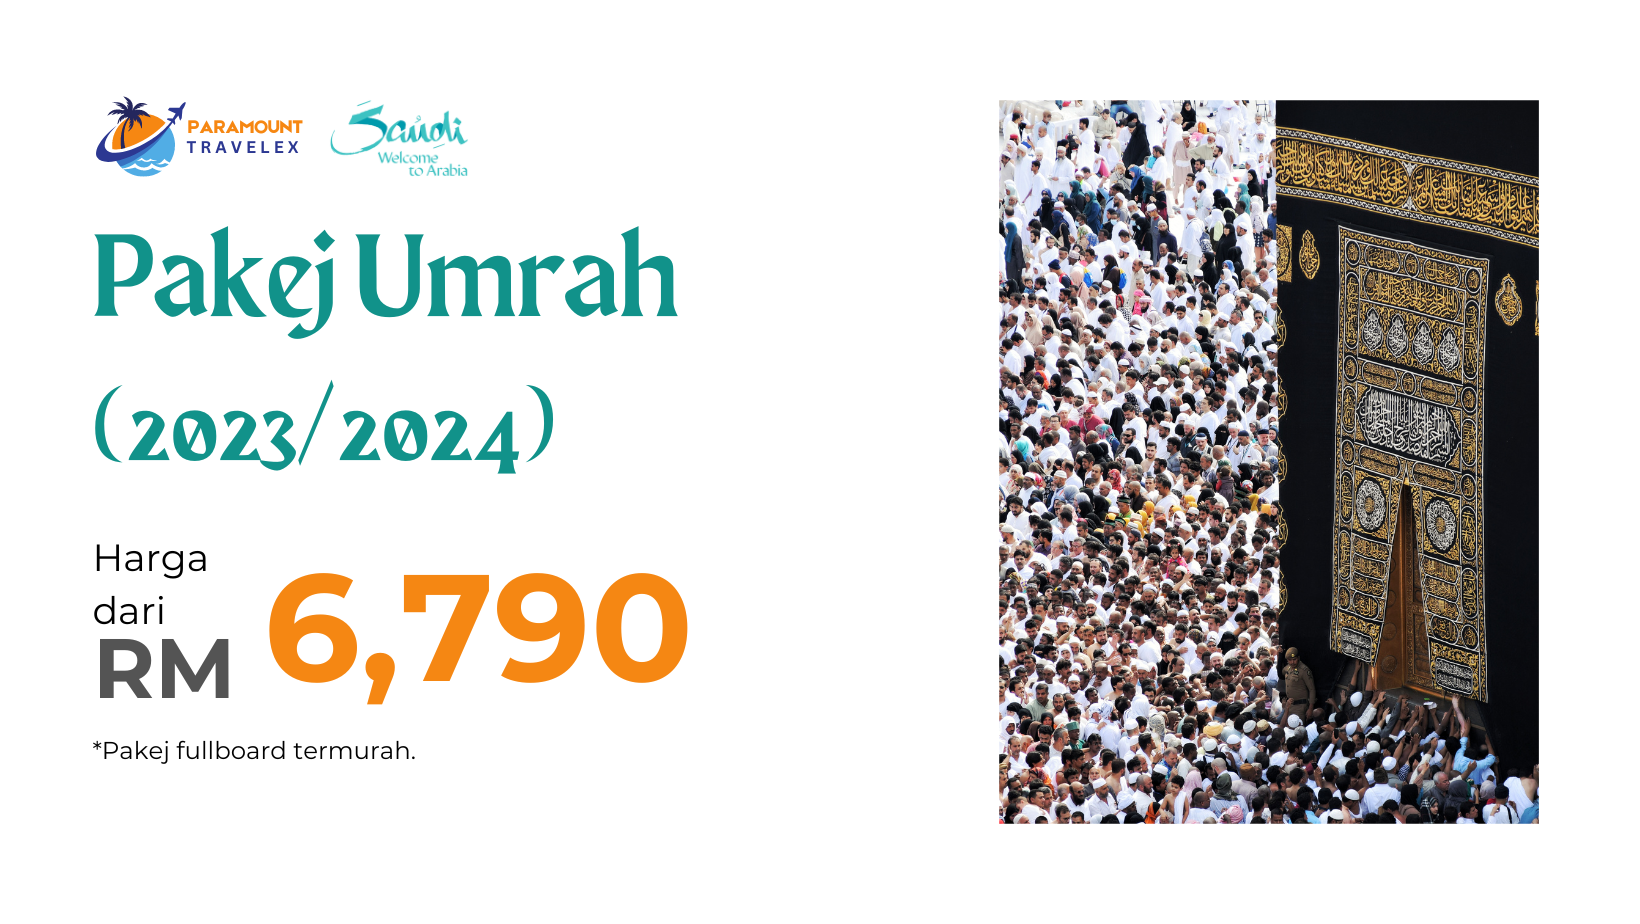 Pakej Umrah 1445 Hijrah (2023/2024) Bersama PARAMOUNT Travelex